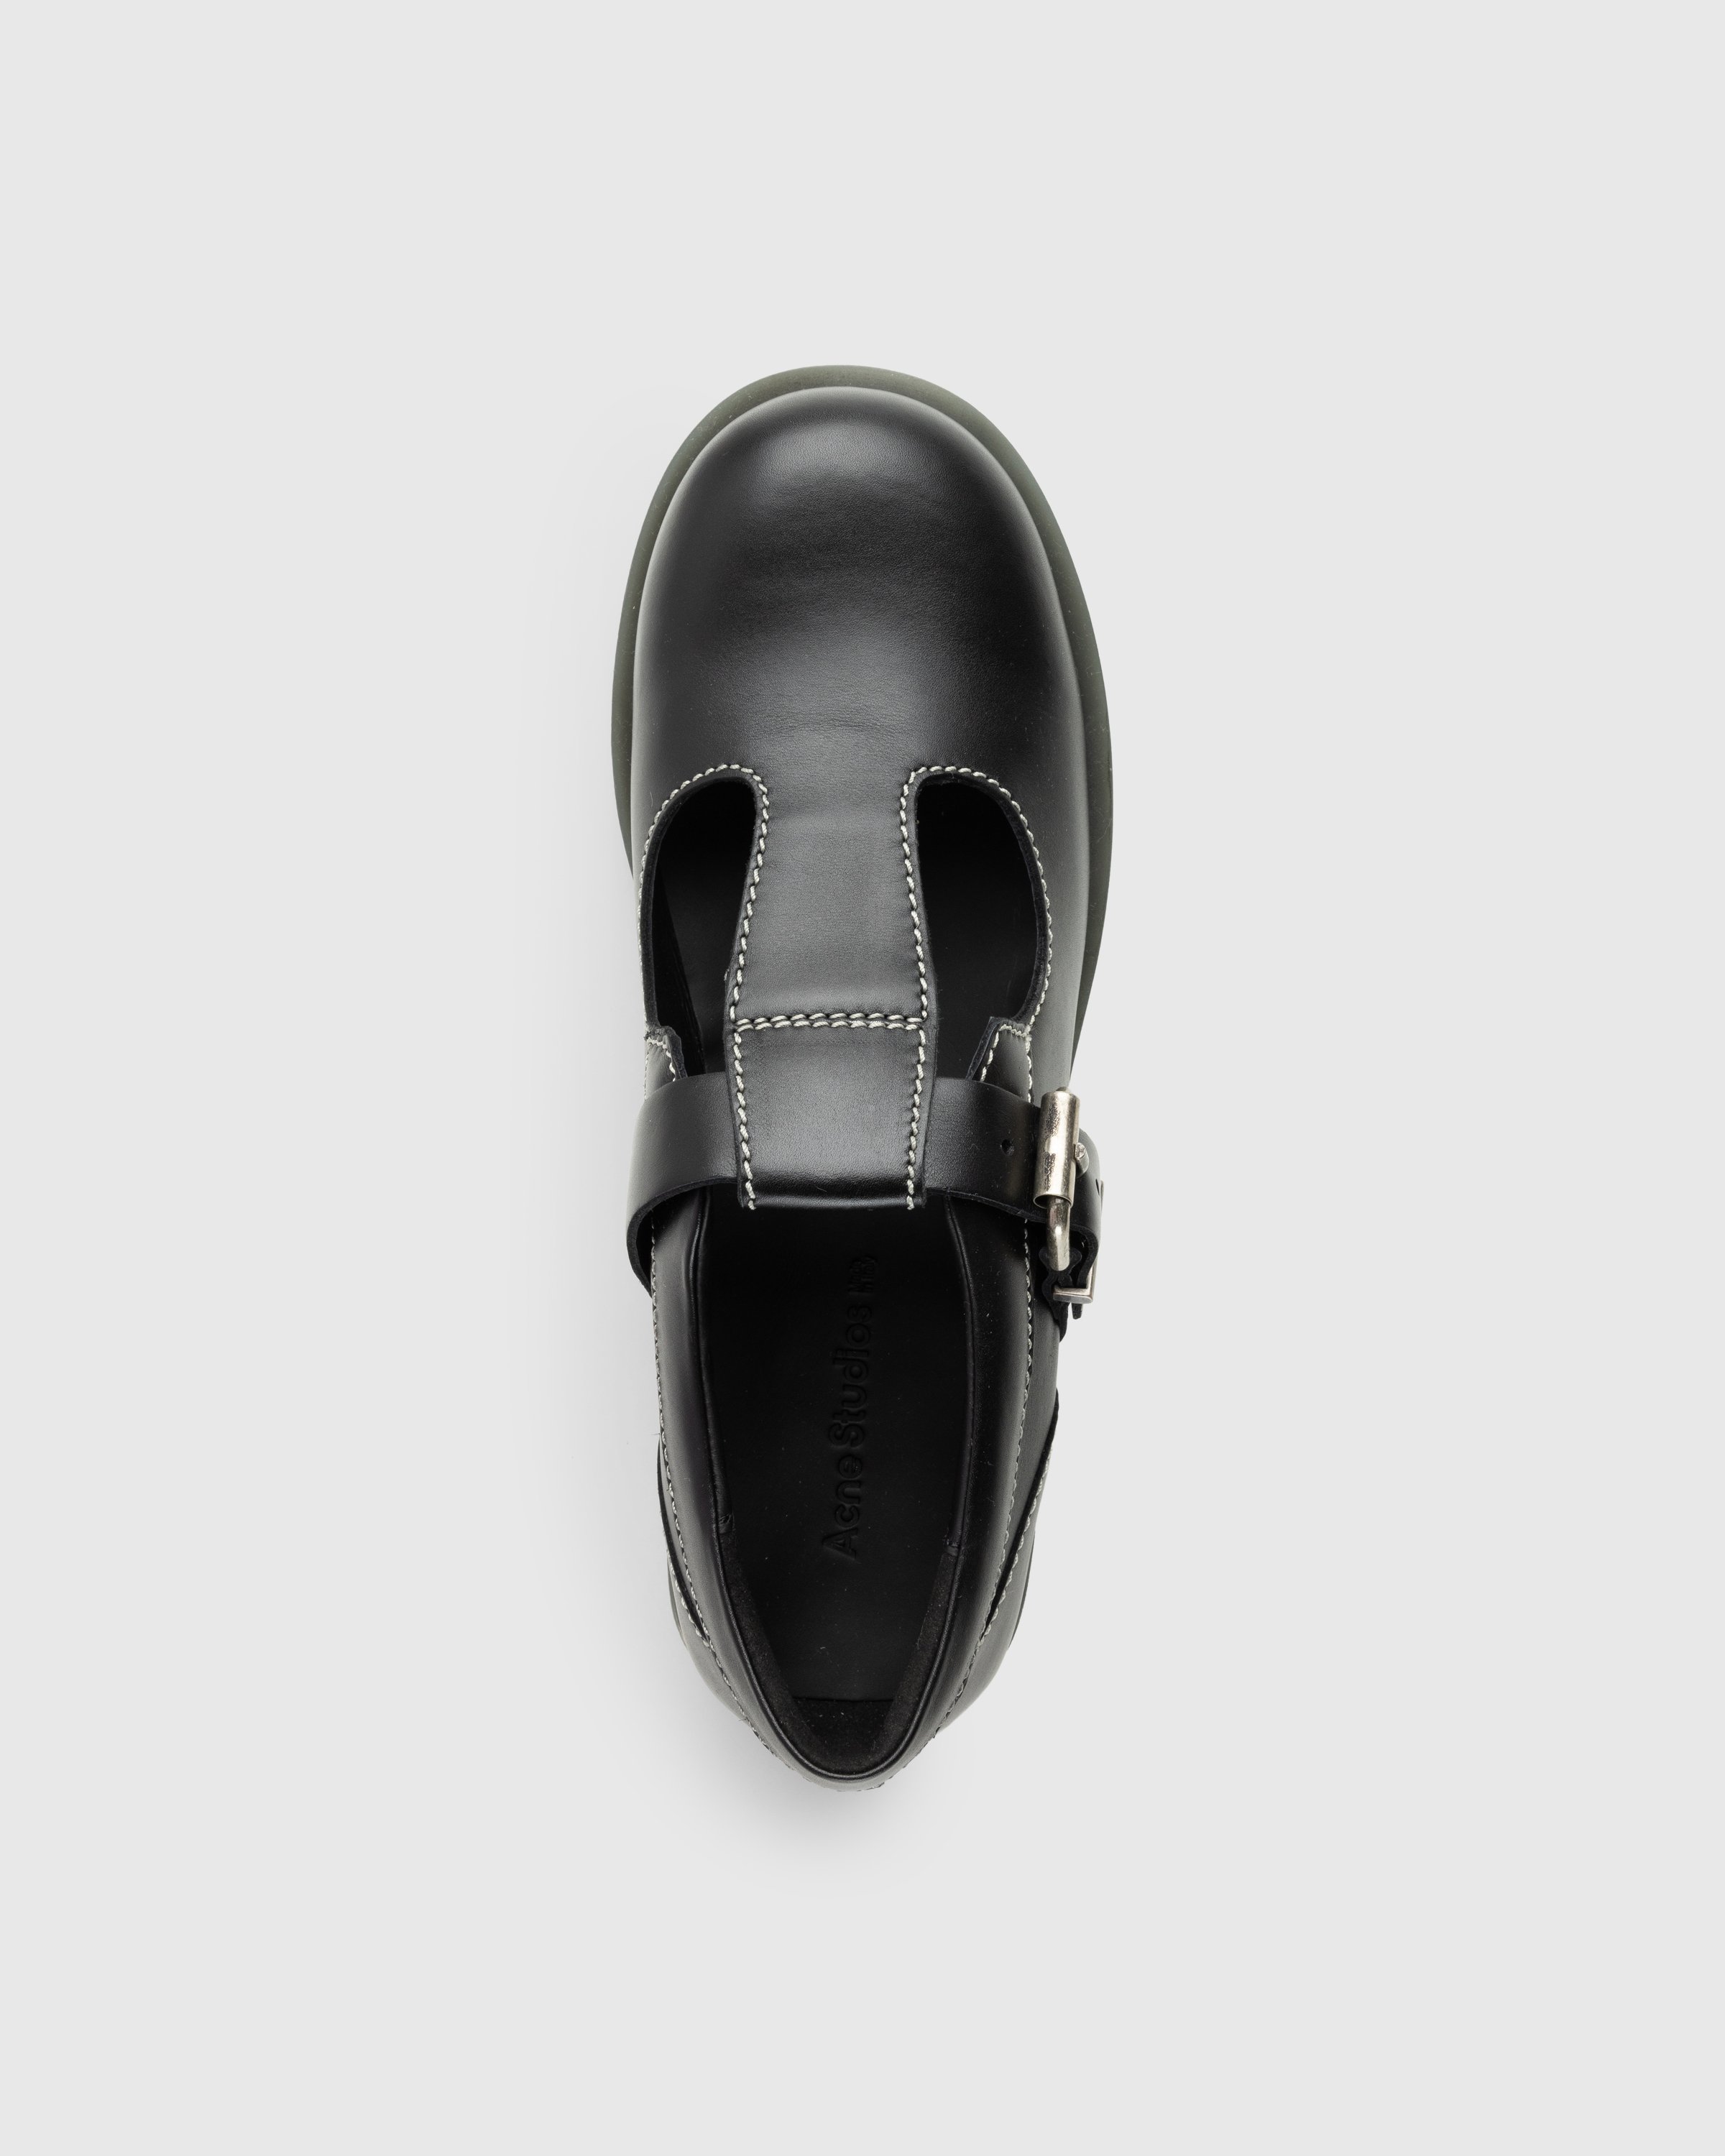 Acne Studios - Berylab Leather Buckle Shoes Black - Footwear - Black - Image 5